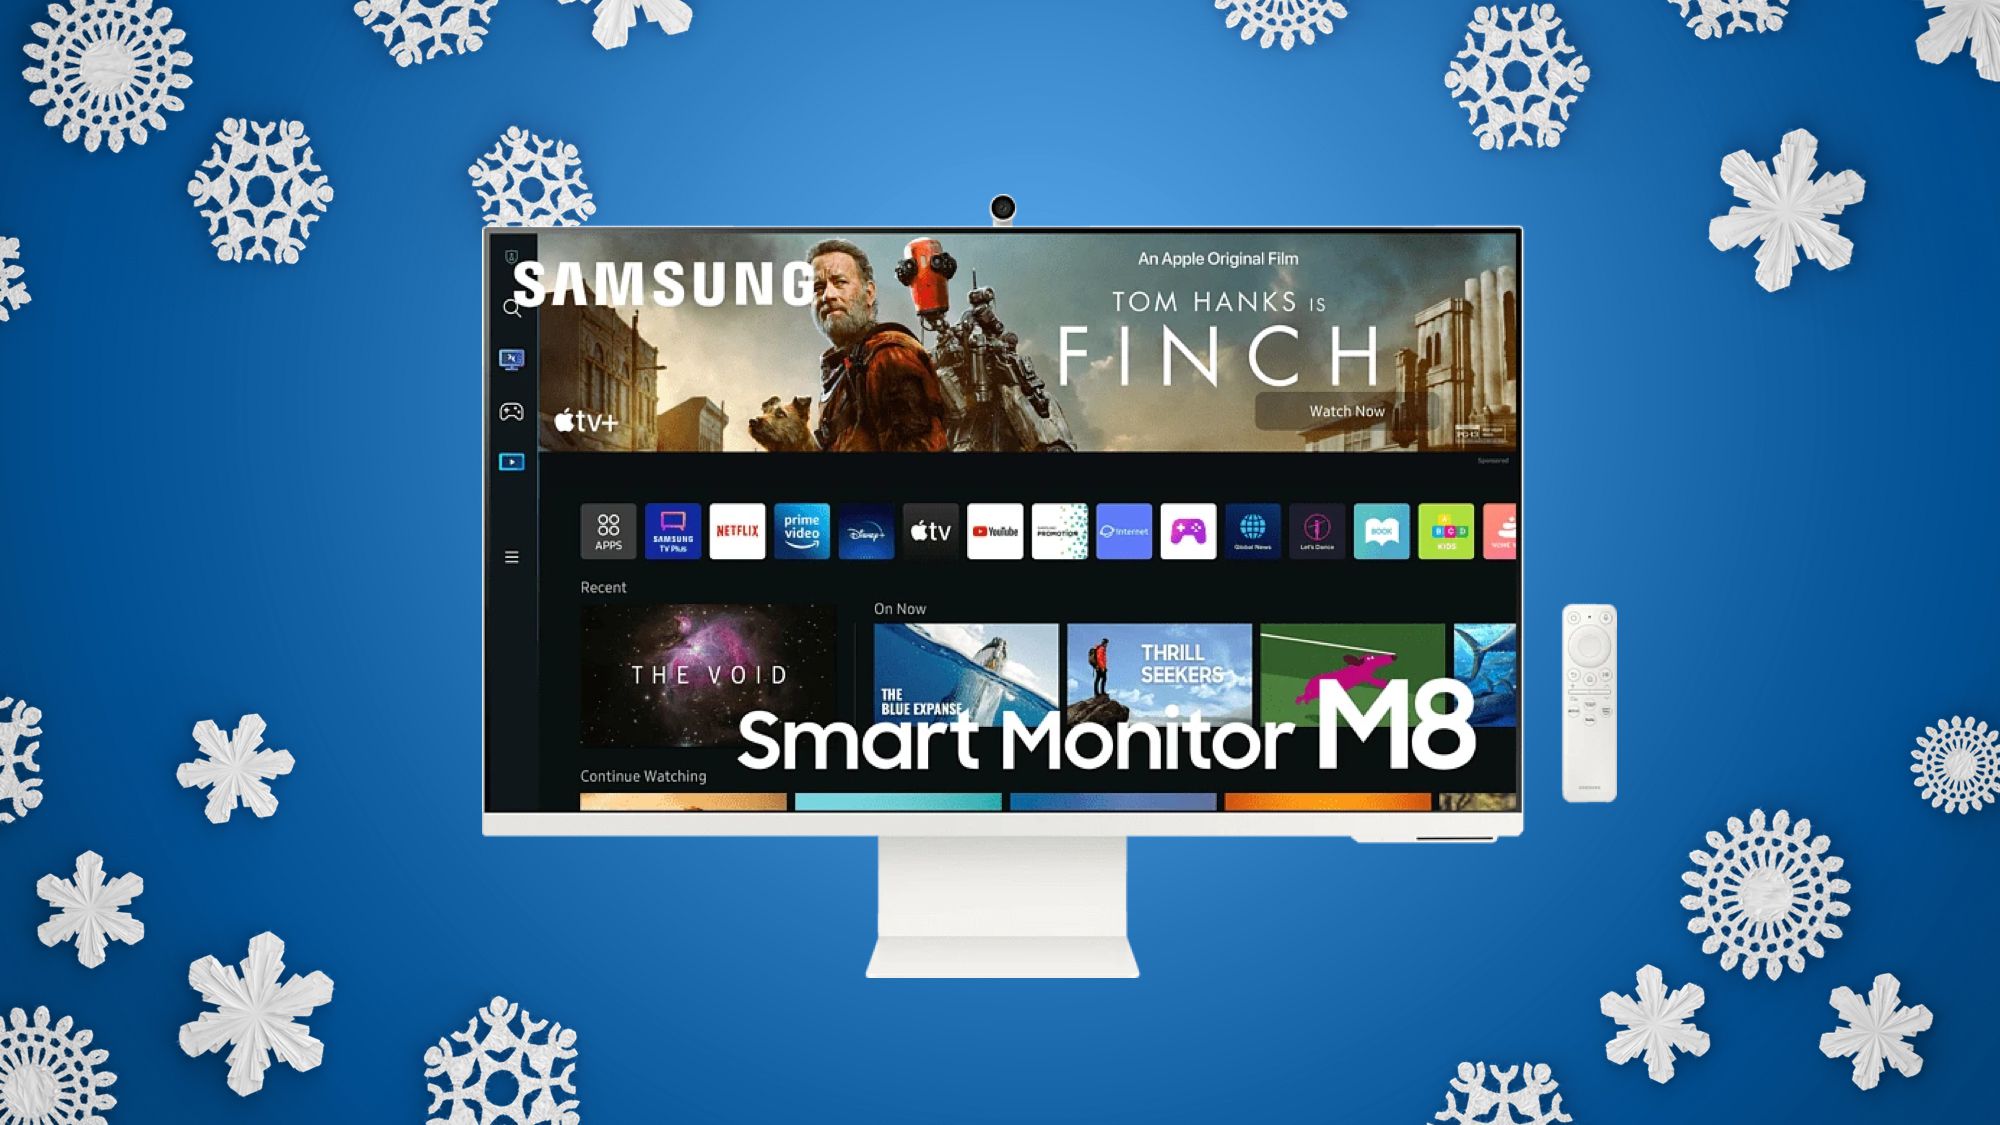 Deals: Samsung's iMac-Like Smart Monitor M8 Gets Massive $330 Discount - macrumors.com